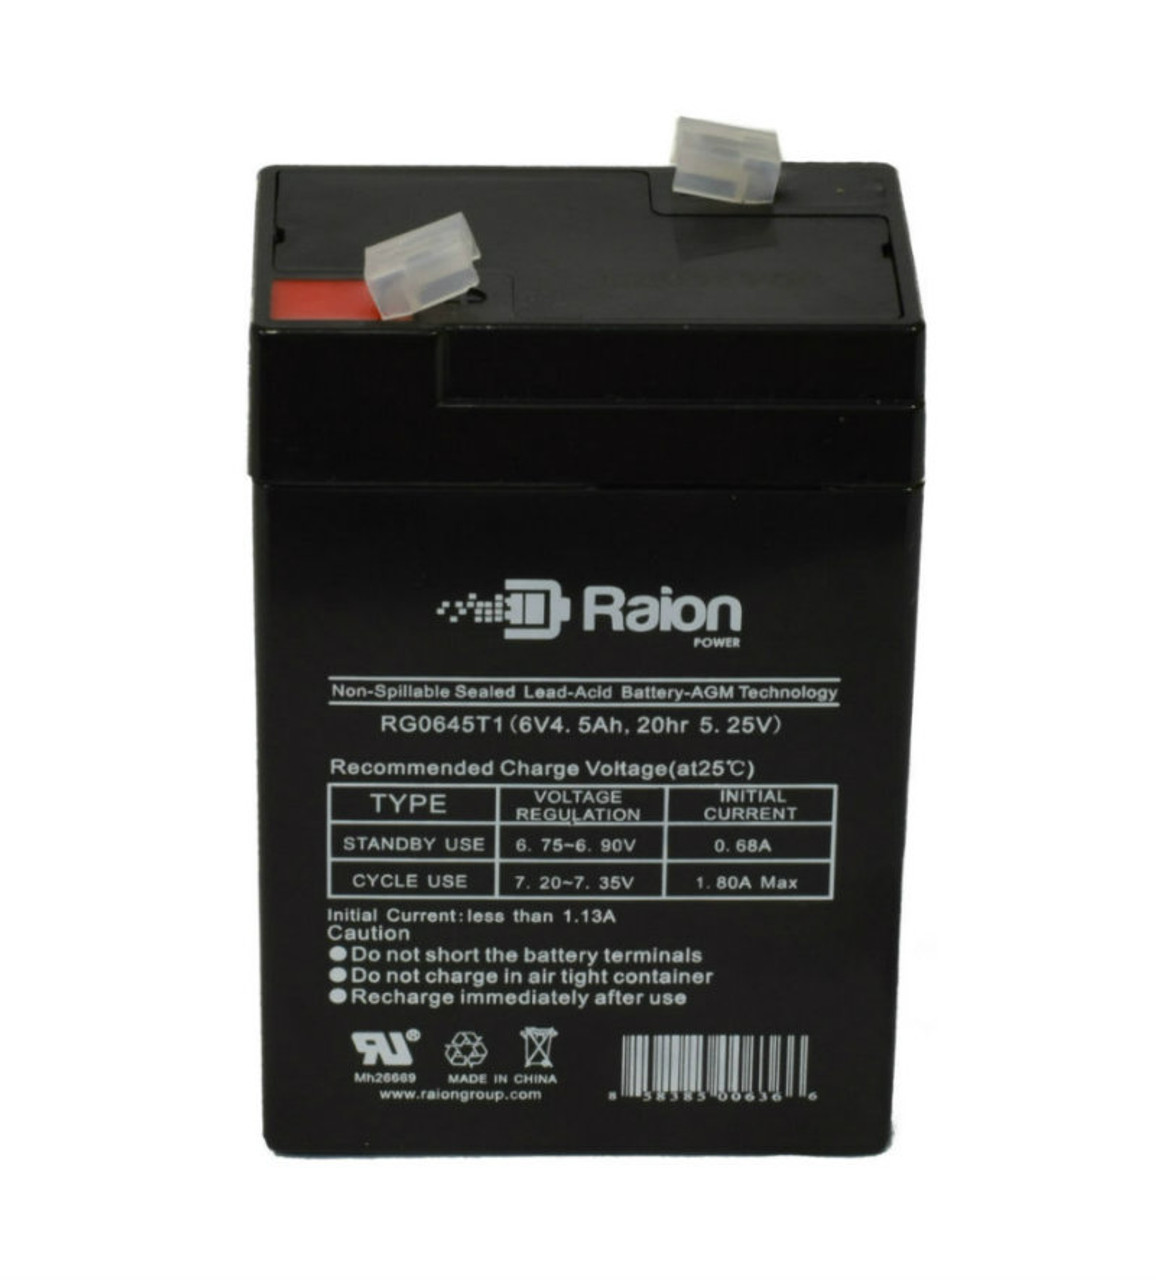 Raion Power RG0645T1 Replacement Battery Cartridge for Emergi-Lite 12000